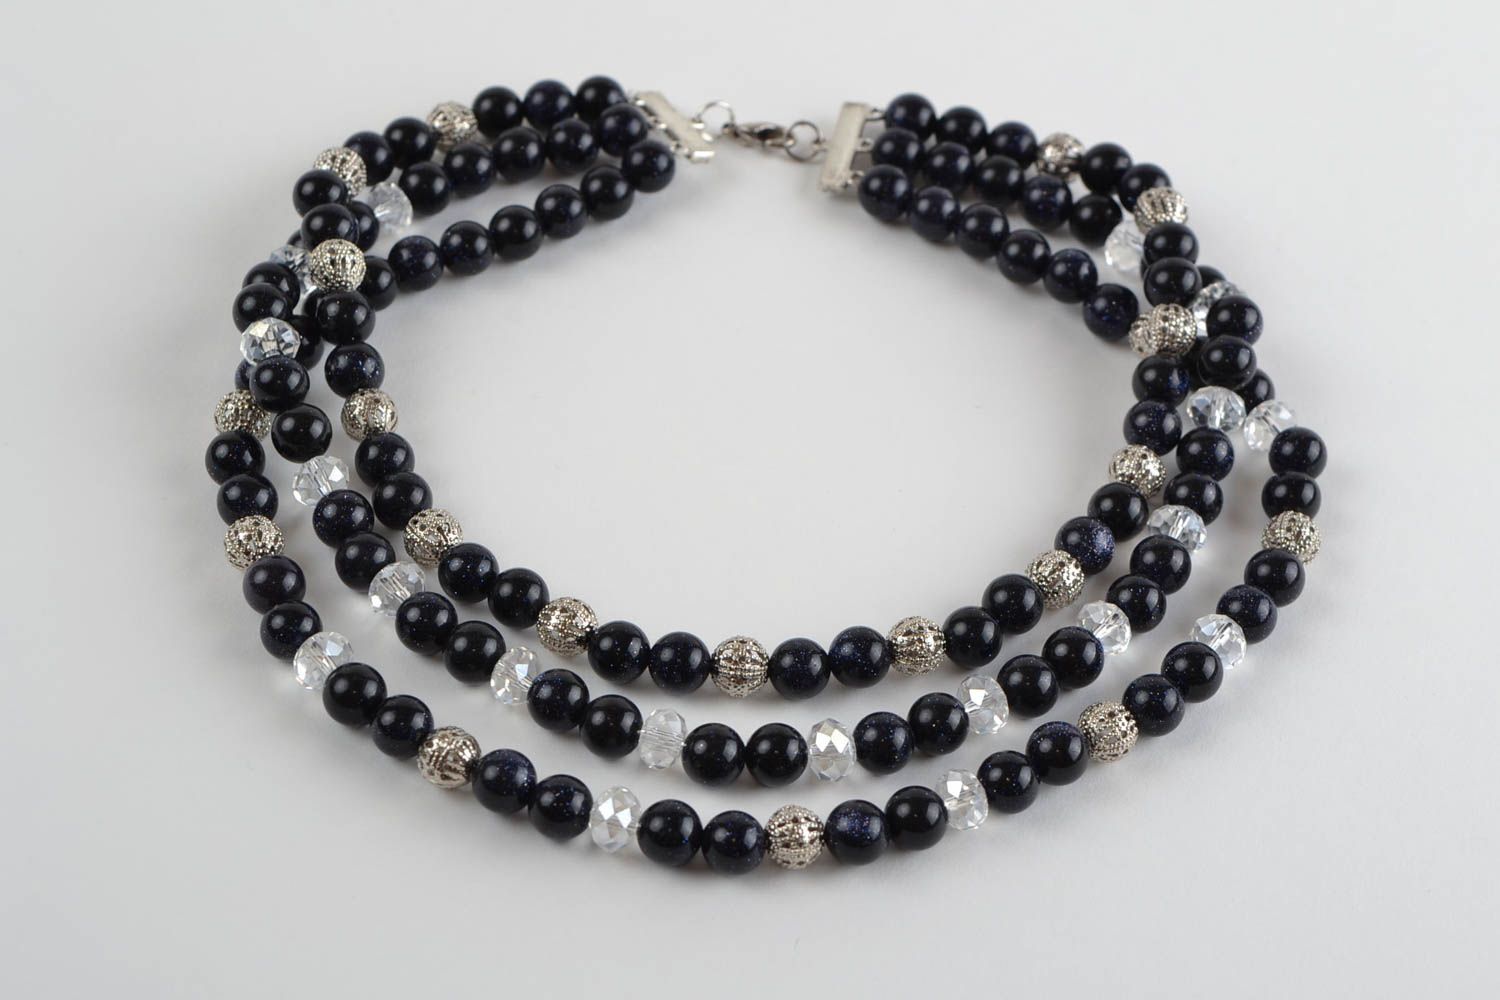 Handmade crystal bead and aventurine jewelry set earrings necklace and bracelet photo 3